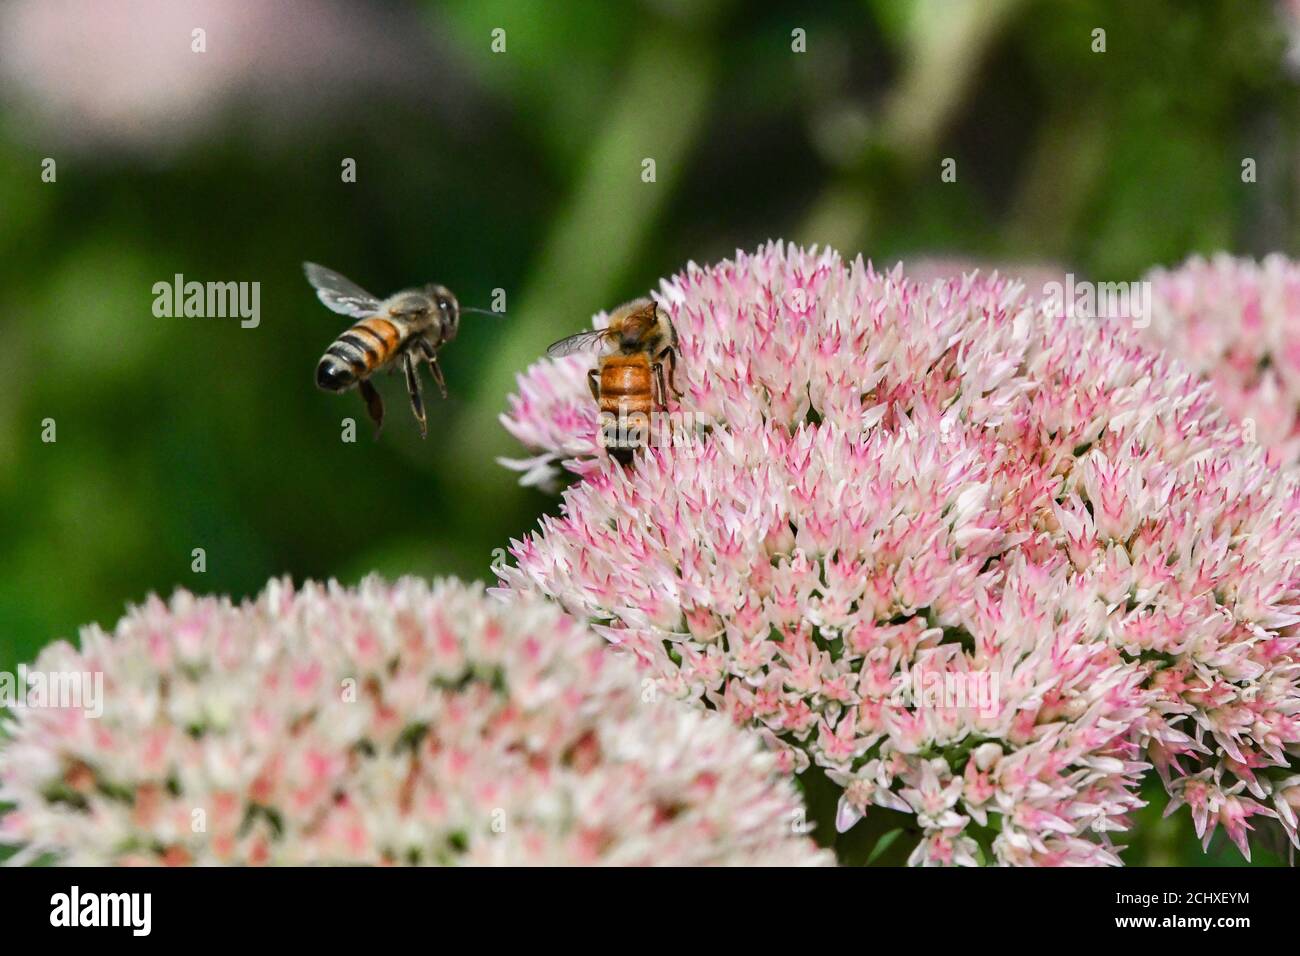 honey bee - Apis mellifera - pollinating a pink flower Autumn Joy stonecrop - Sedum Telphium - apis honeybee on flower completing pollination Stock Photo